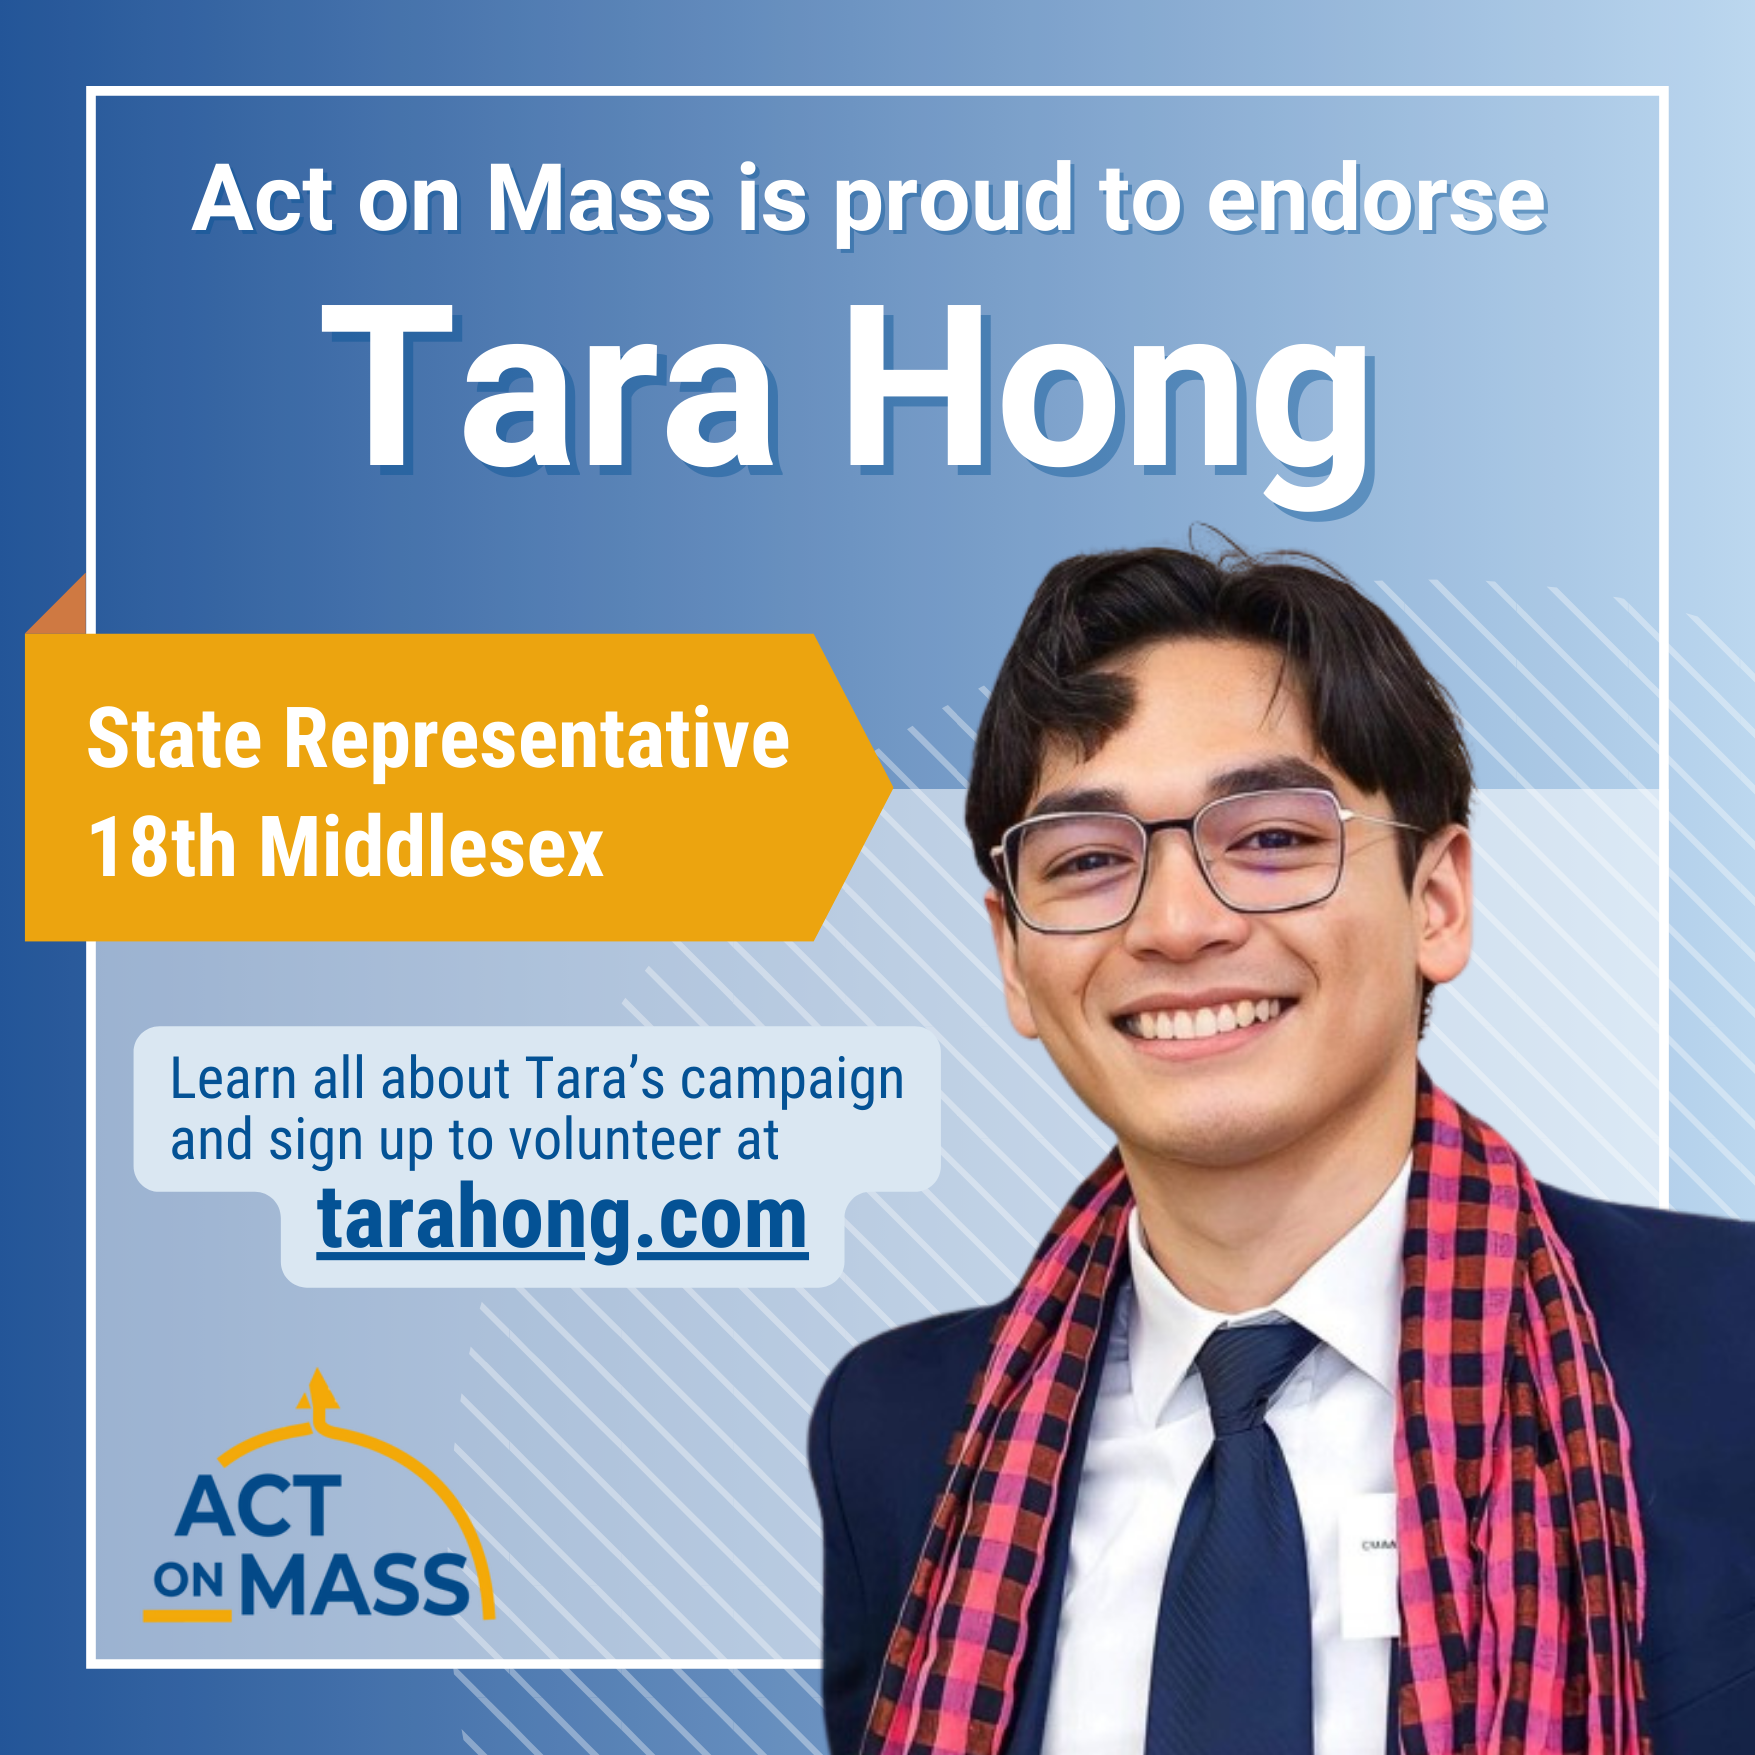 Headshot of Tara Hong with text: "Act on Mass proudly endorses Tara Hong - State Representative, 18th Middlesex"